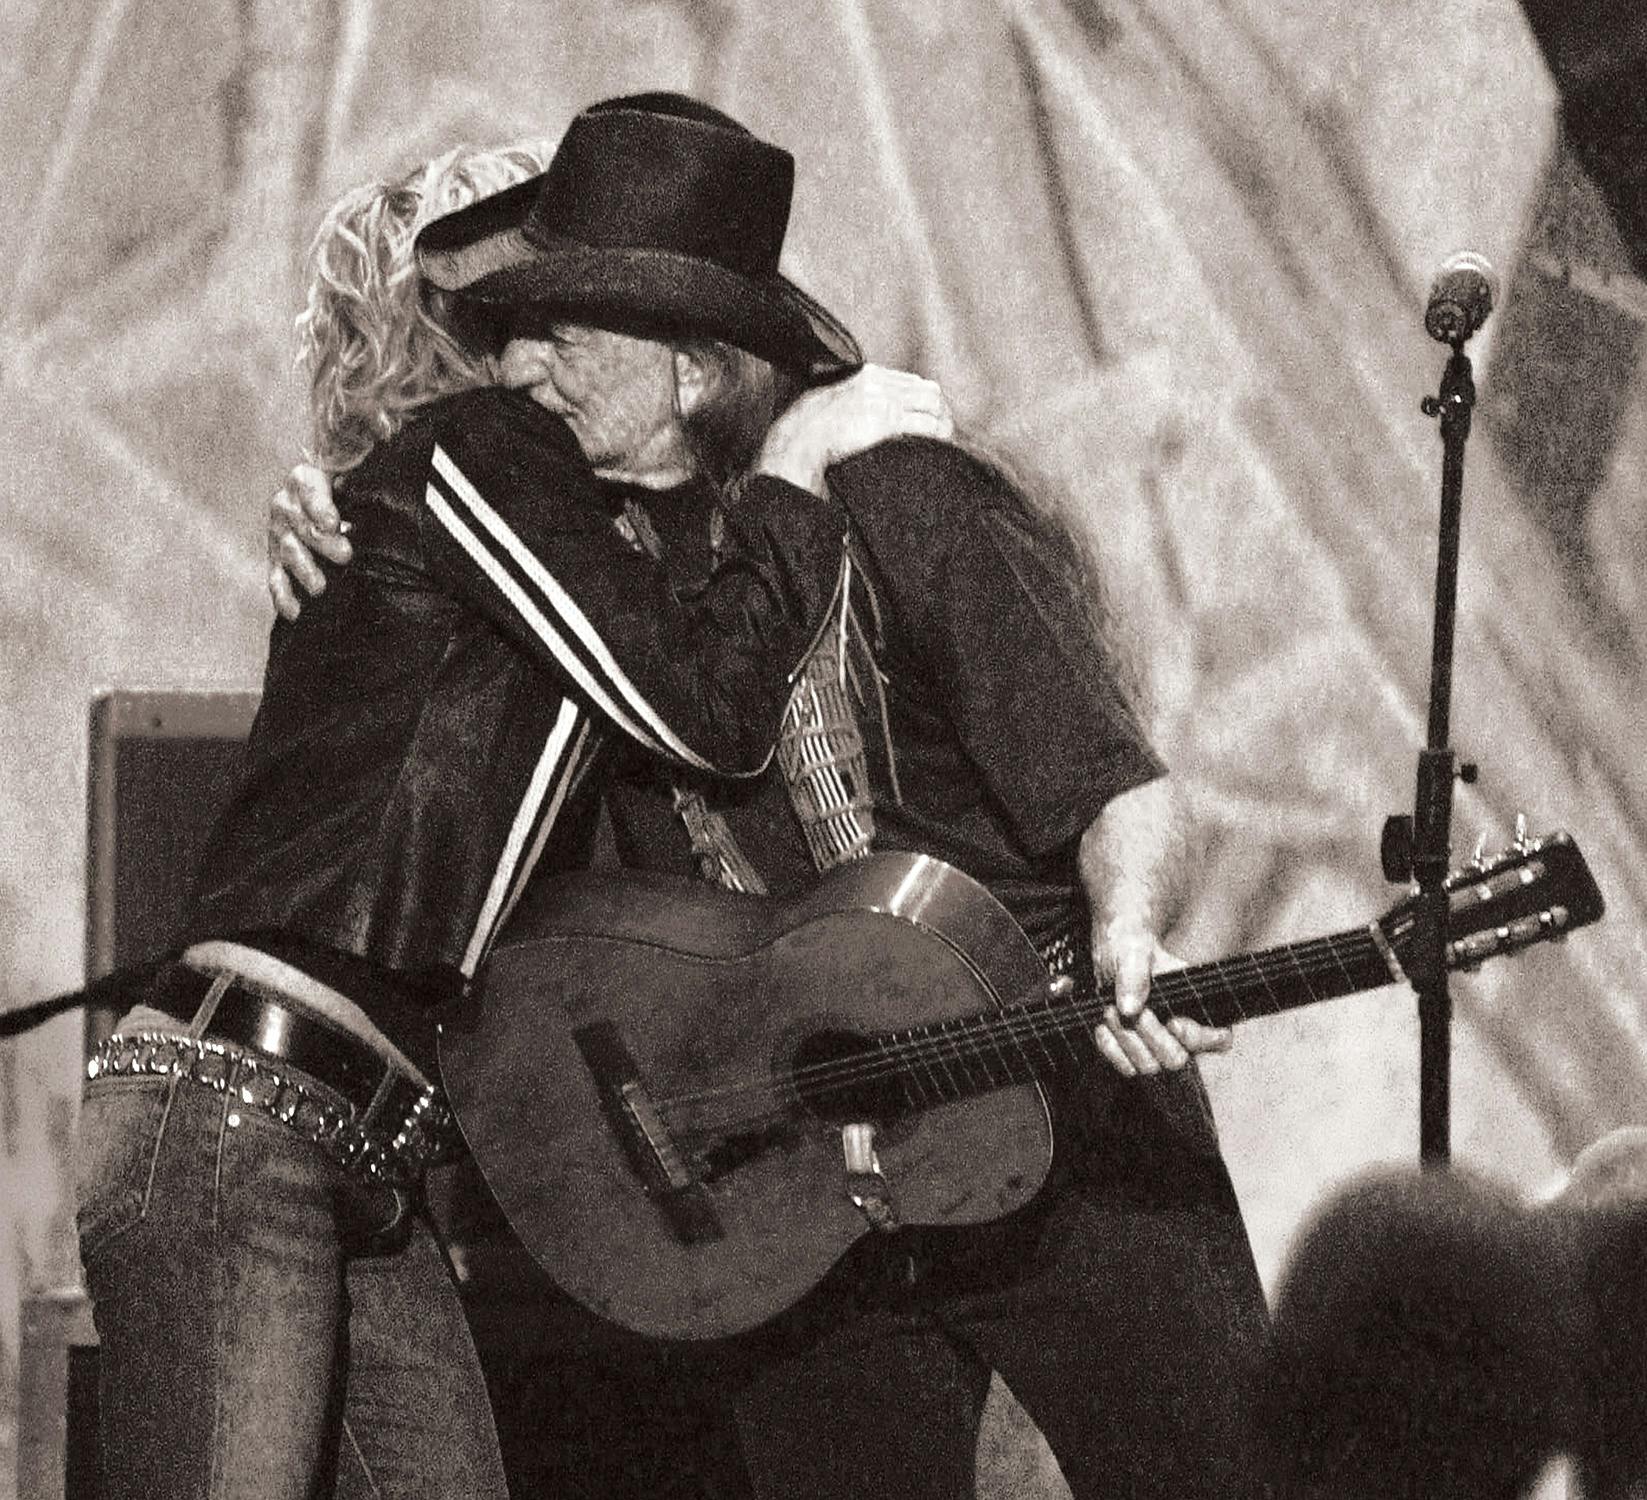 Lucinda William hugging Willie Nelson on stage. 